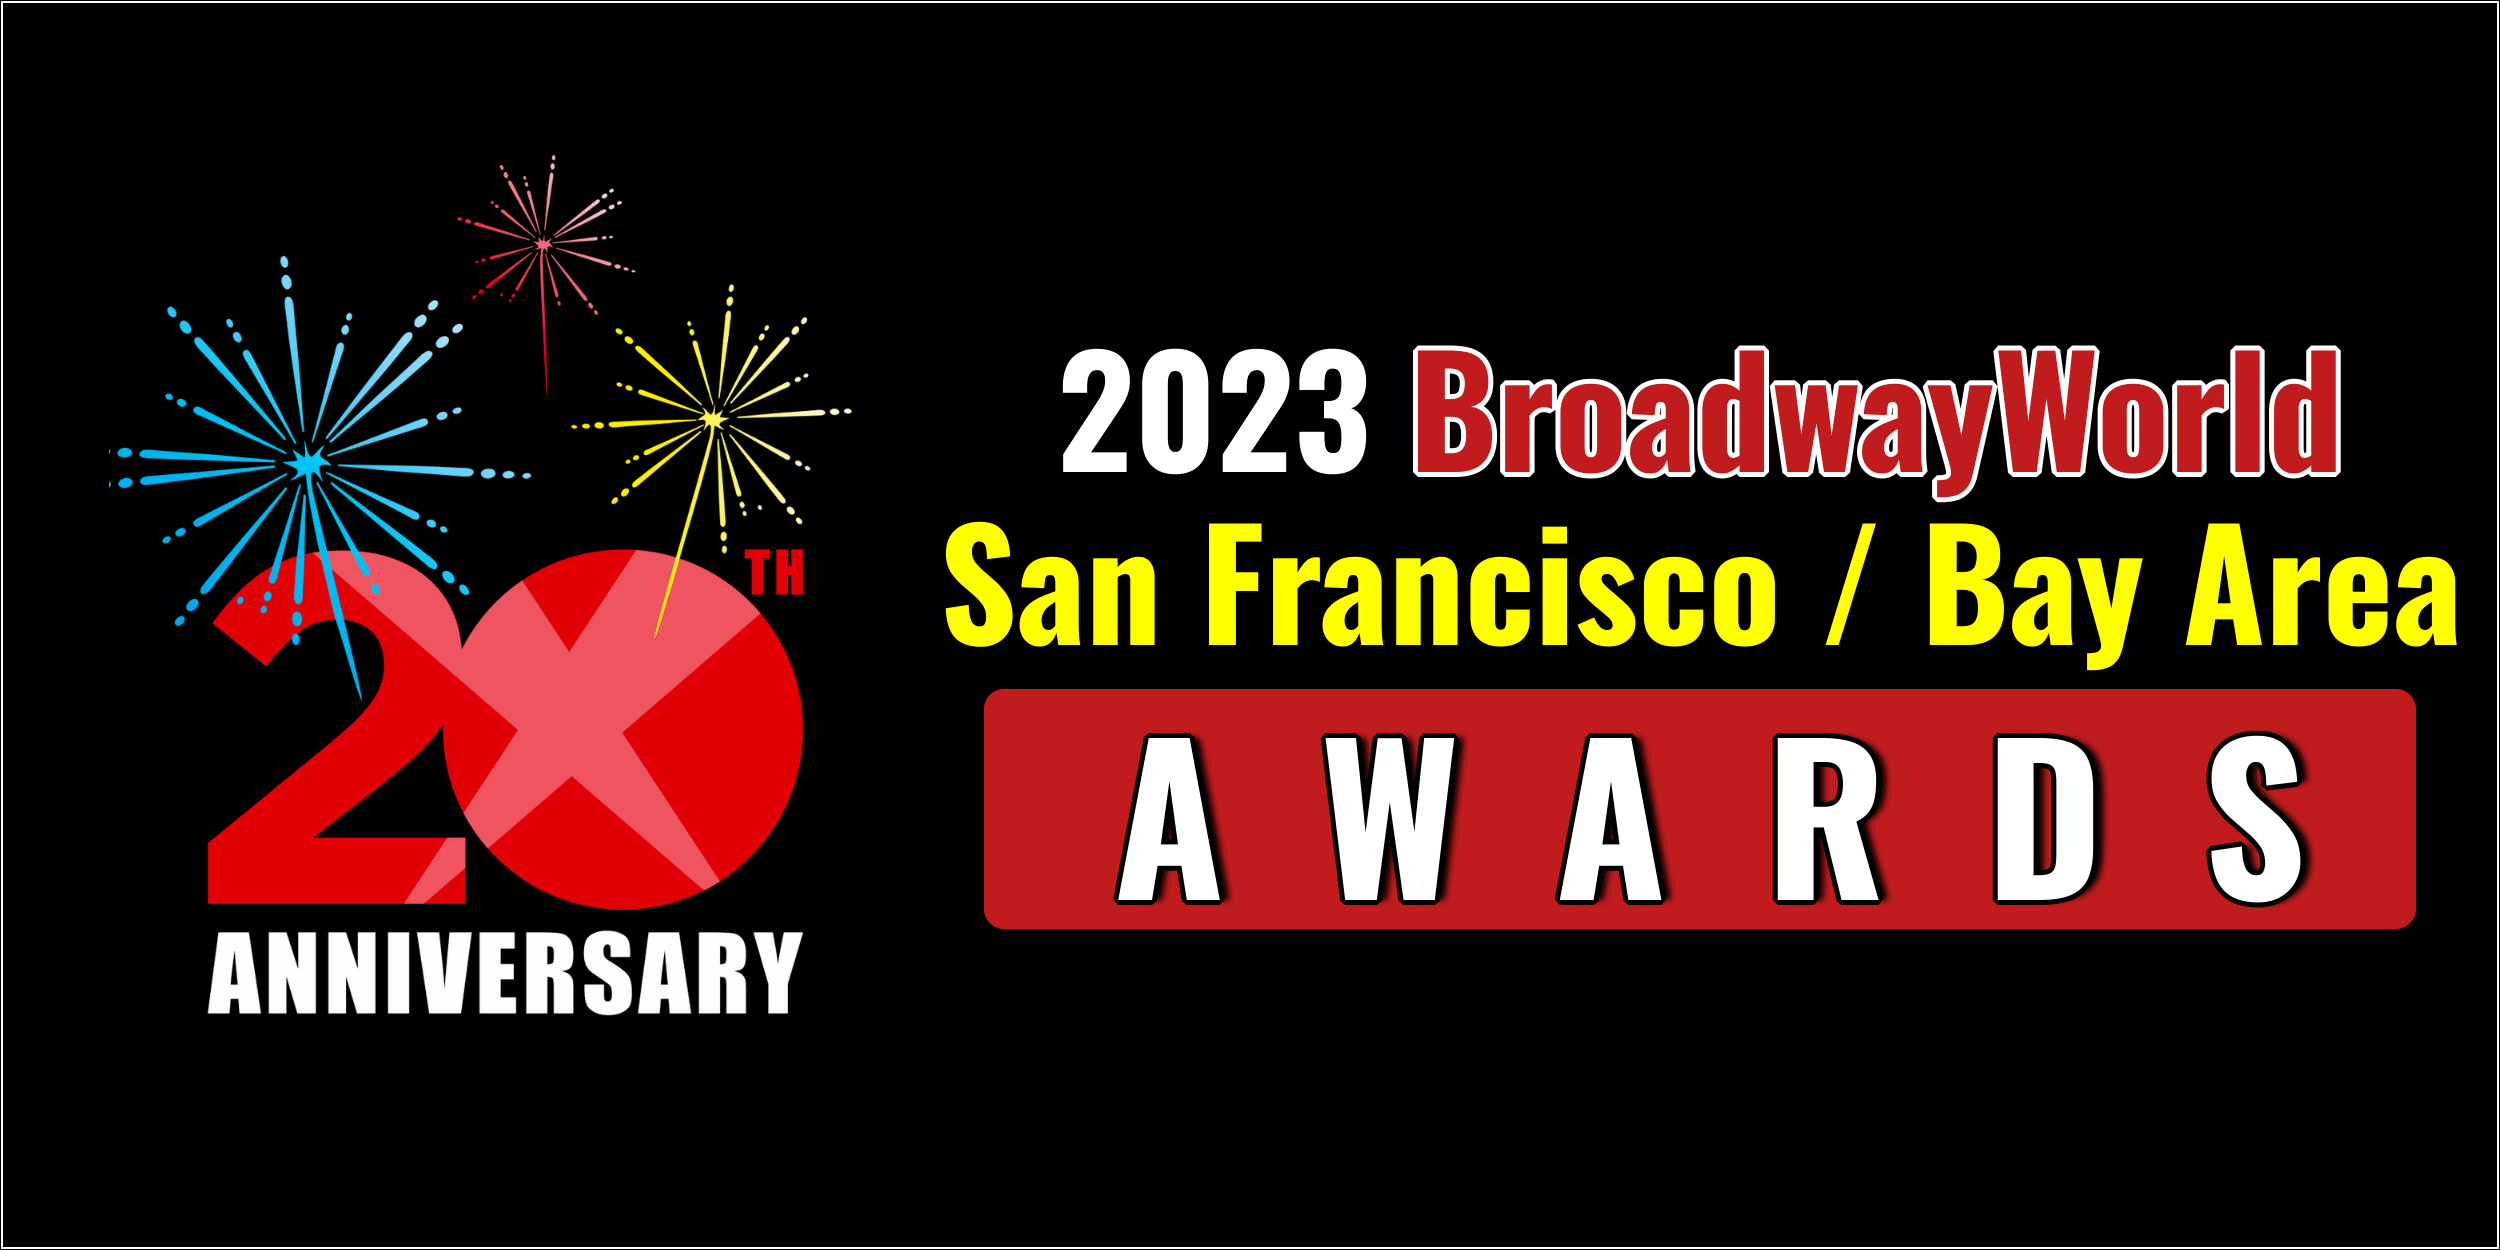 Latest Standings Announced For The 2023 BroadwayWorld San Francisco / Bay Area Awards; KIN Photo